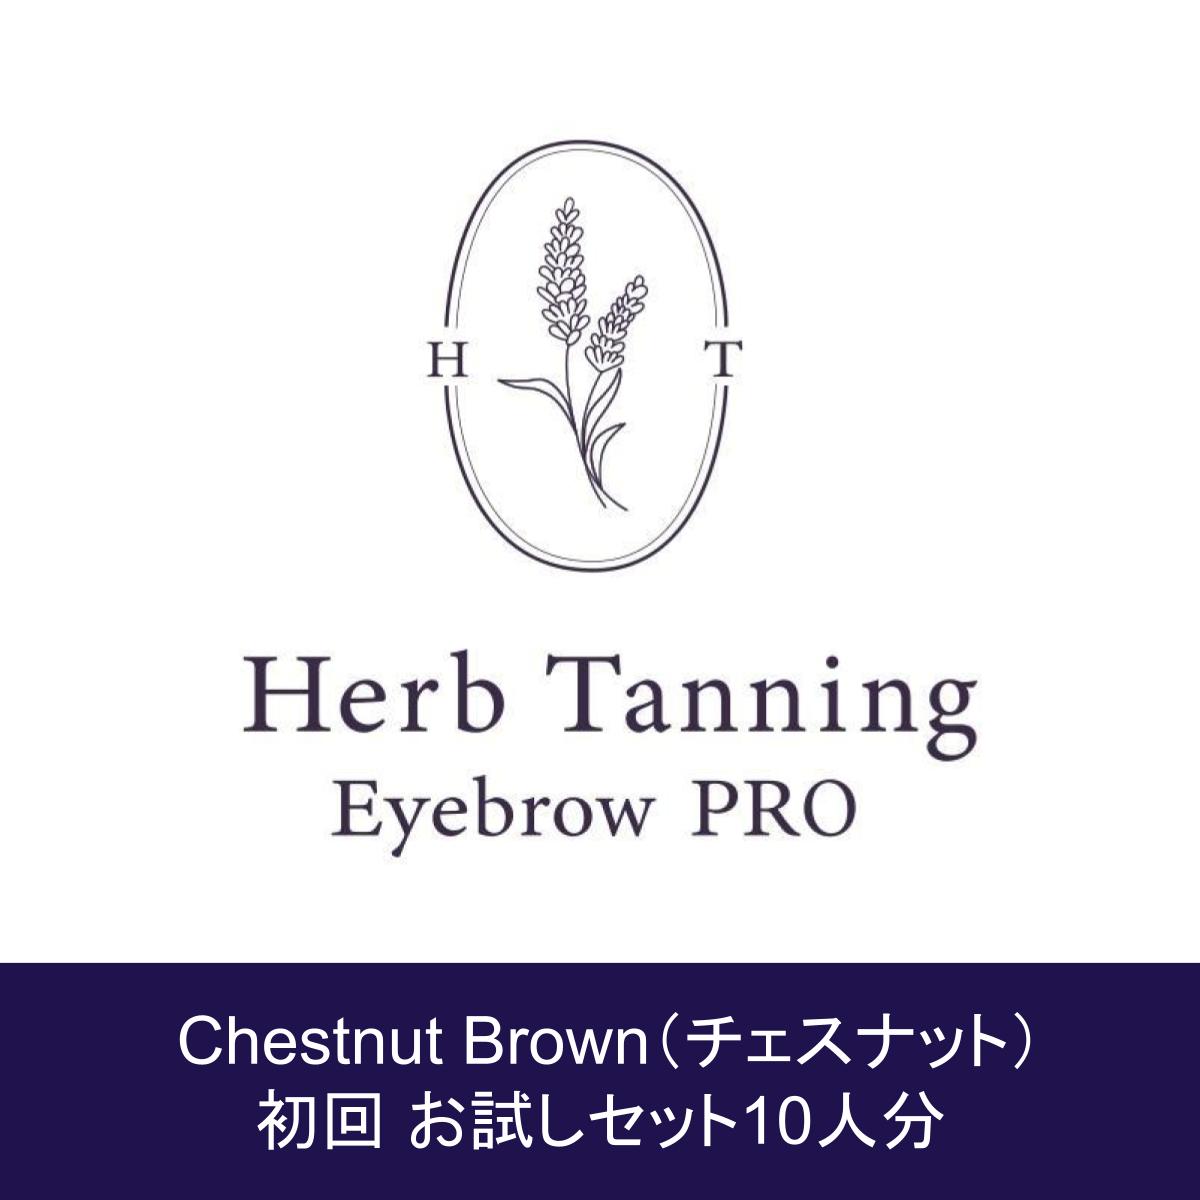 【Herb Tanning Eyebrow PRO】 チェスナットブラウン 初回セット